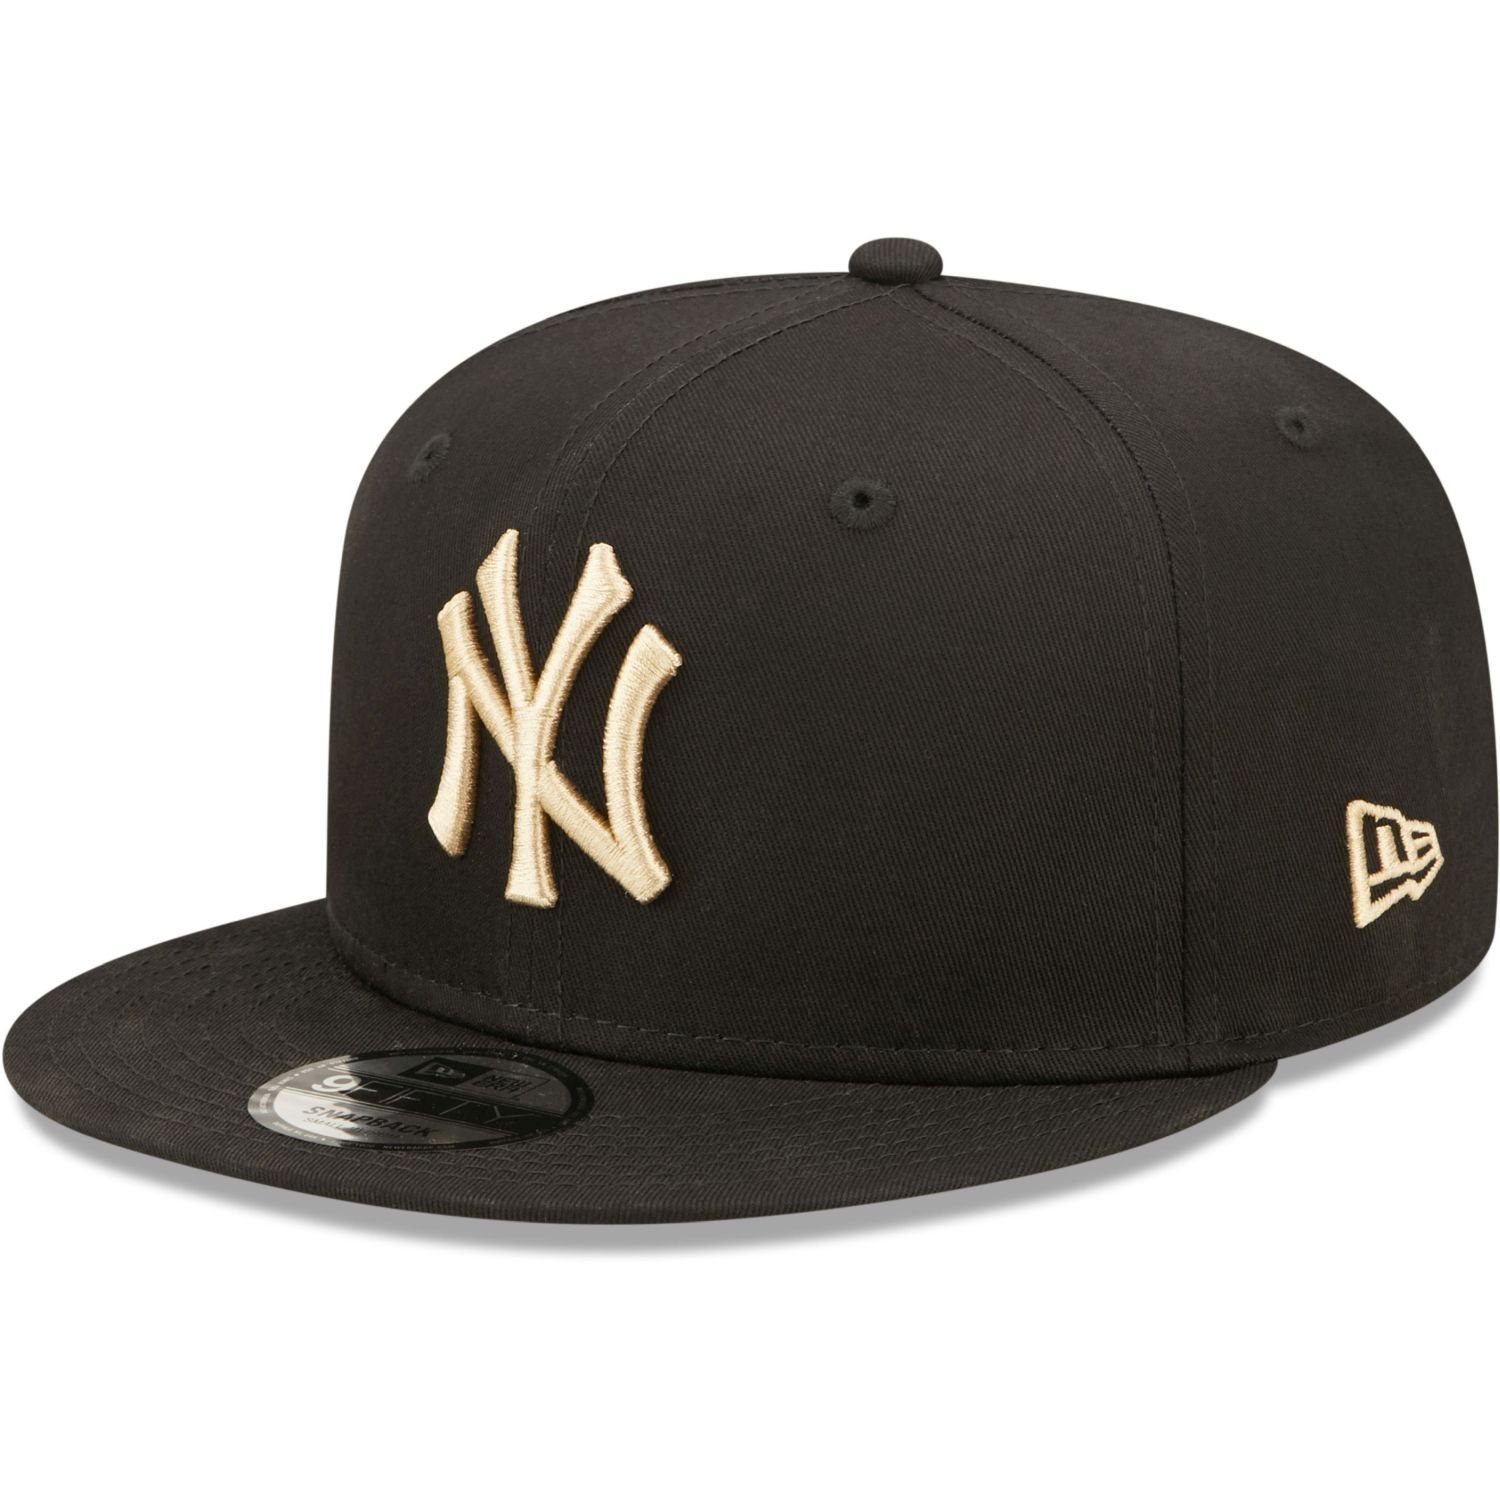 Cap 9Fifty Yankees schwarz Snapback Era York New New